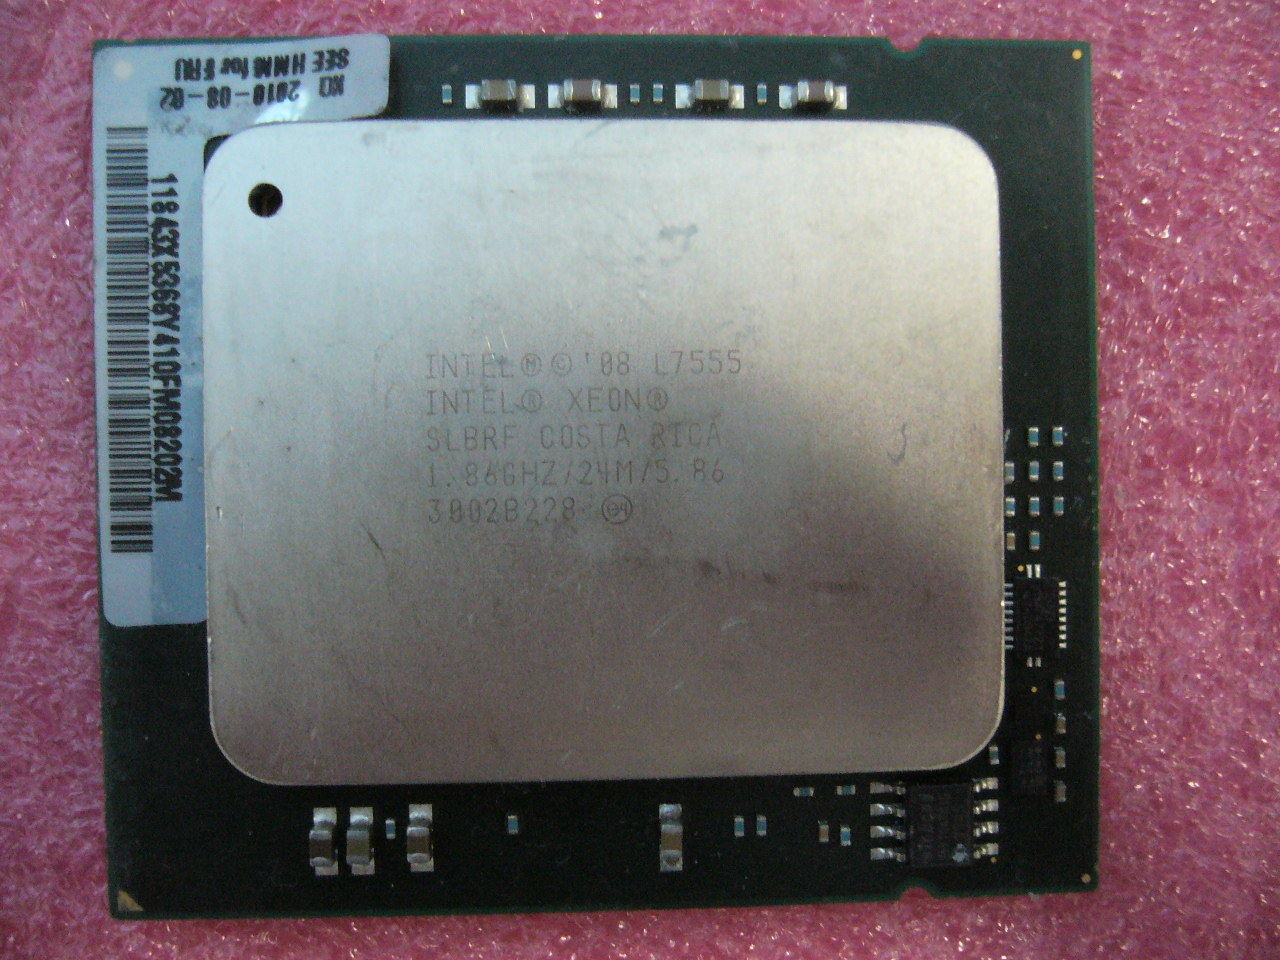 QTY 1x INTEL Eight-Cores CPU L7555 1.86GHZ/24MB 5.86GT/s LGA1567 SLBRF TDP 95W - Click Image to Close